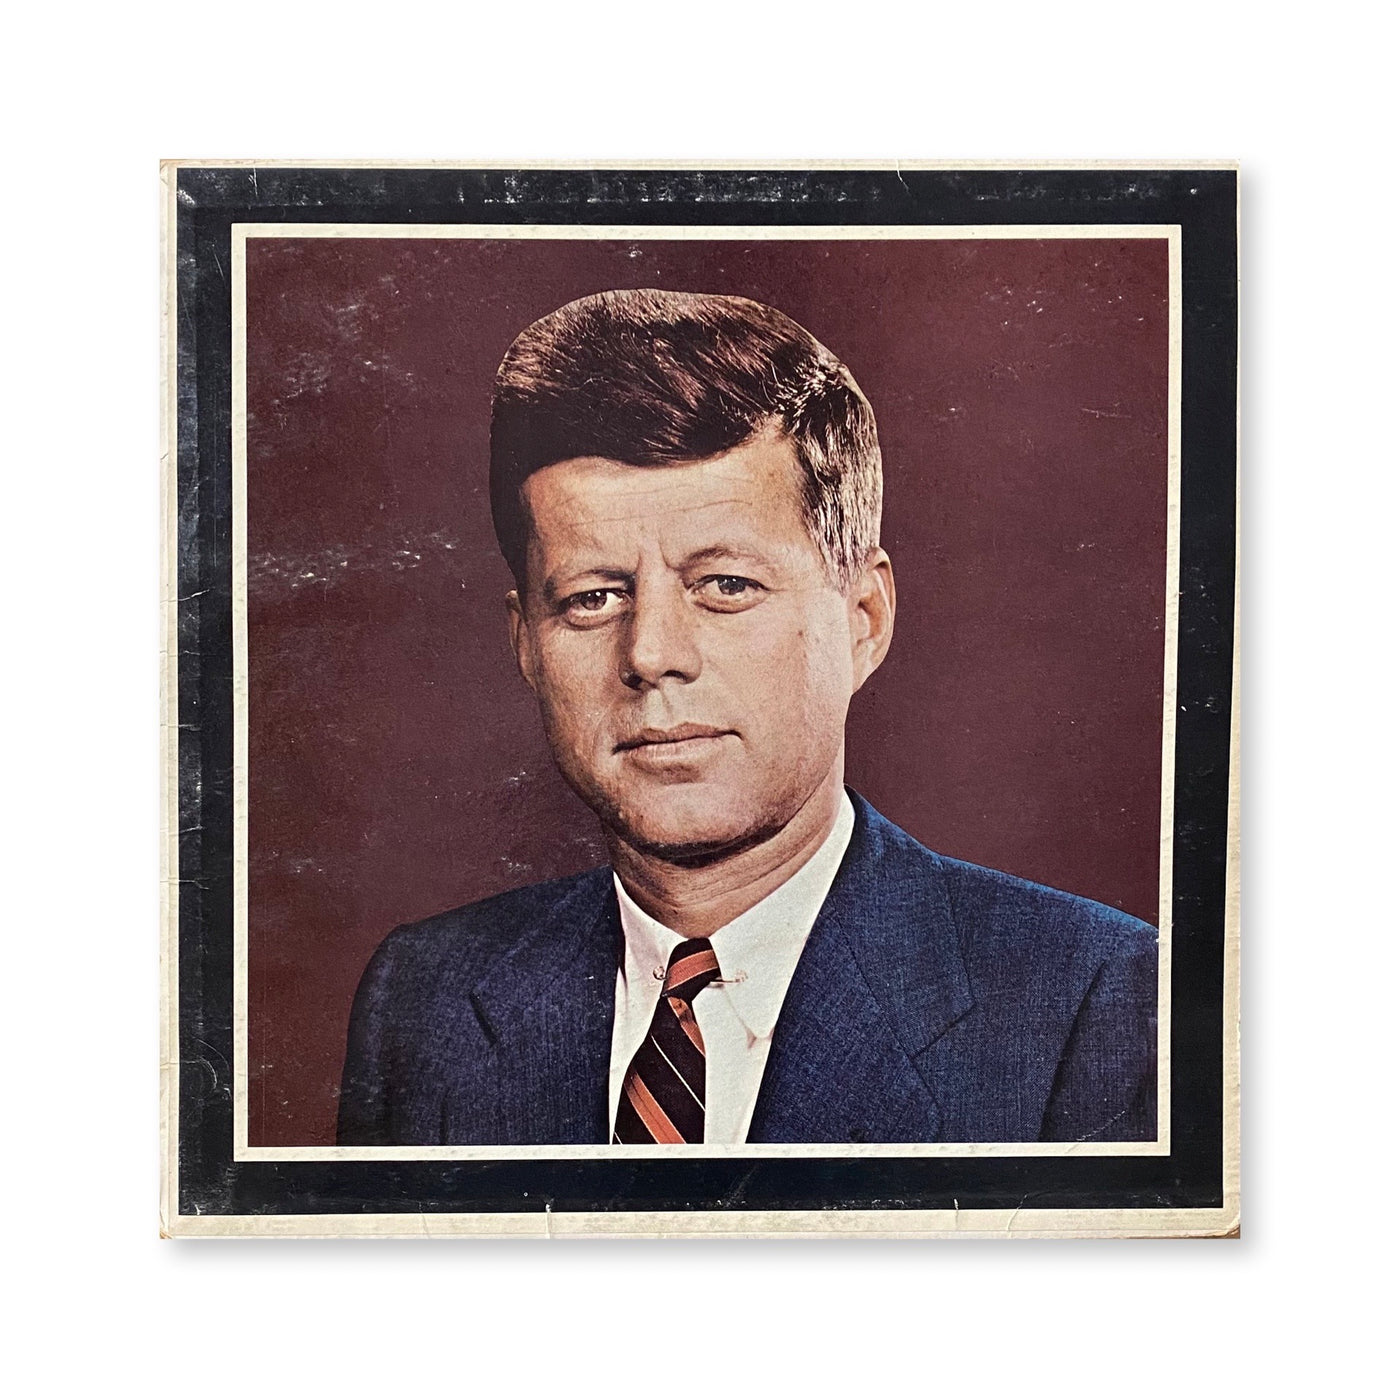 John F. Kennedy - John Fitzgerald Kennedy 1917-1963 (A Memorial Album)